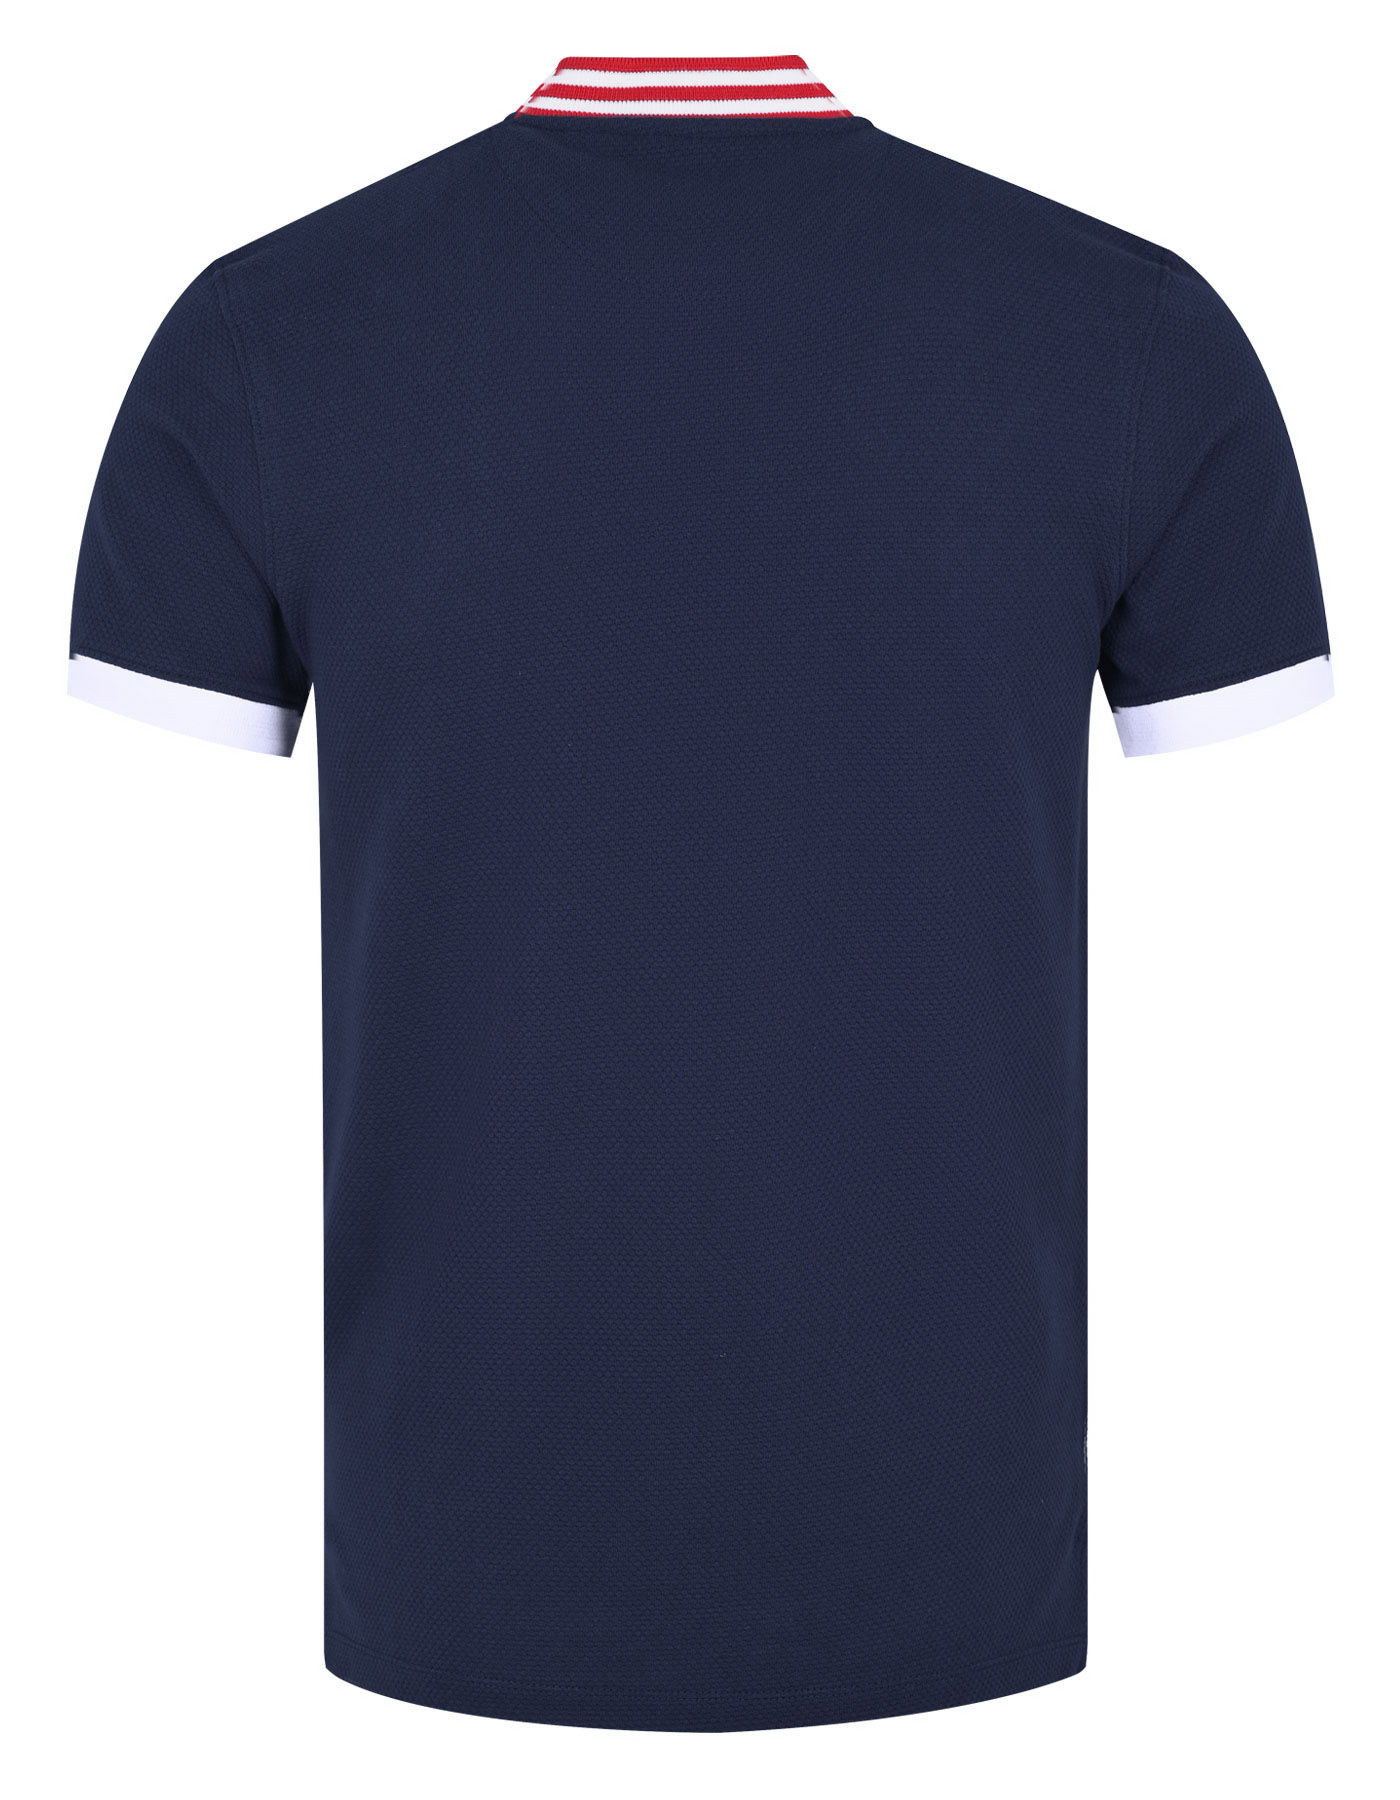 Navy Texture Band Collar Cotton T Shirt For Men |Uniworth